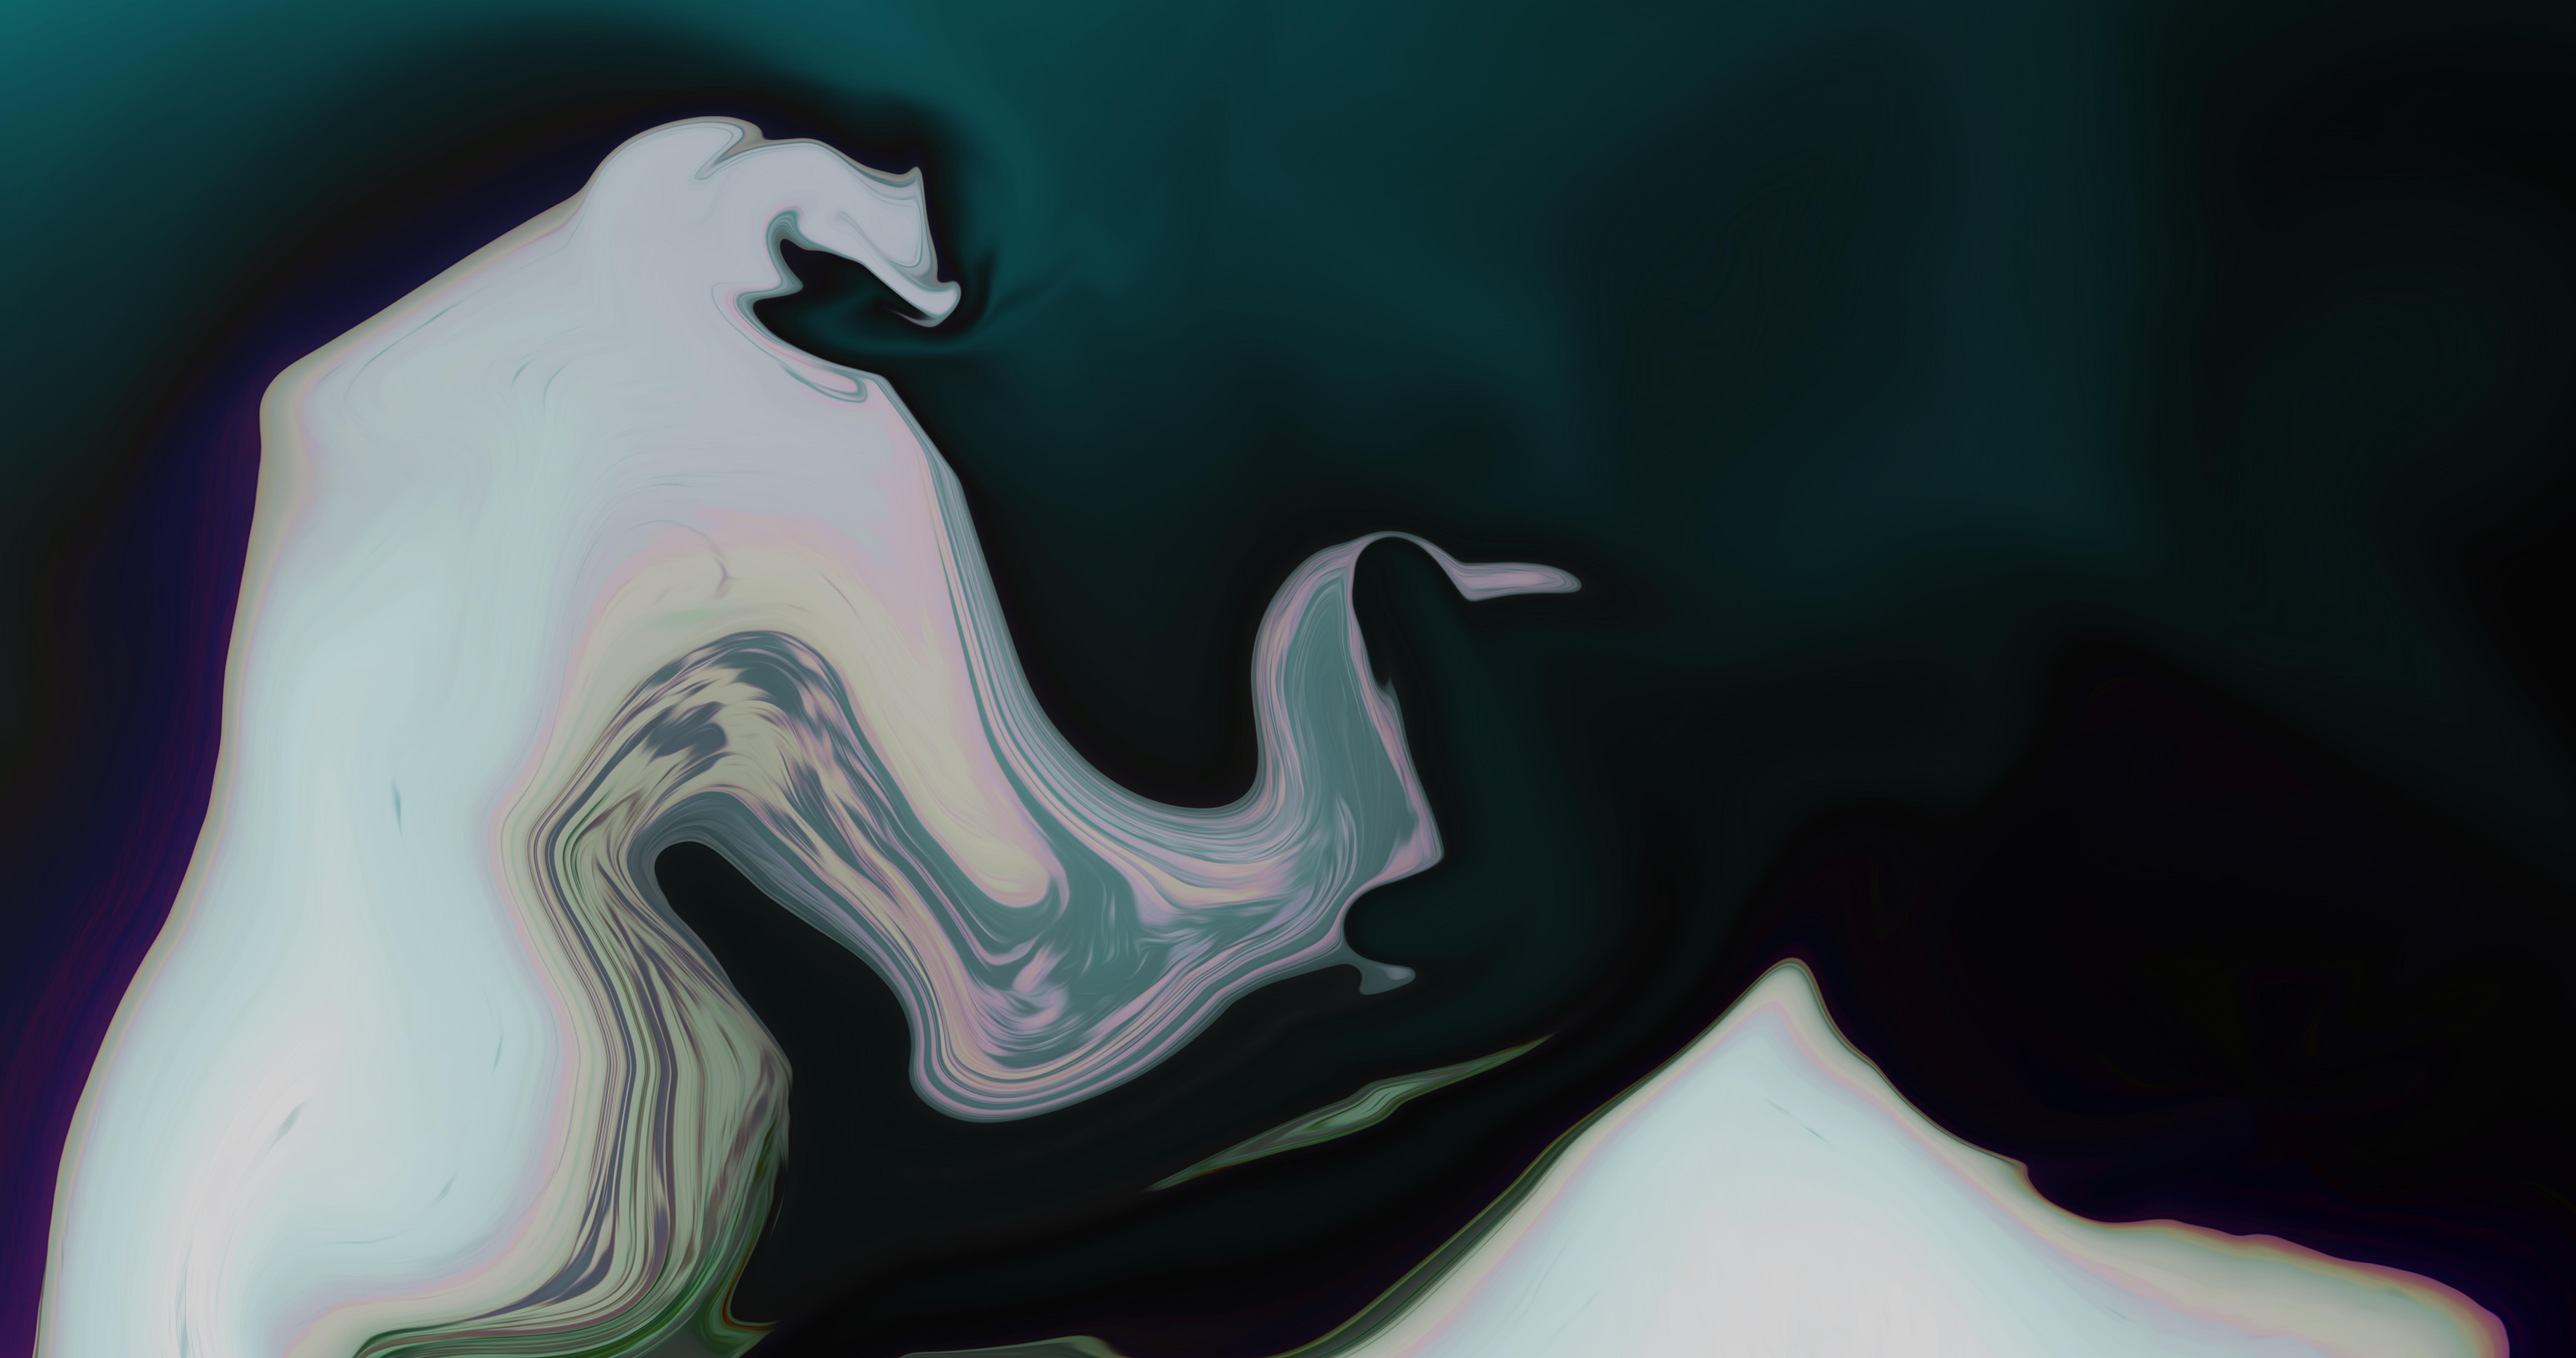 Abstract Shapes Fluid Liquid Artwork Digital Art 8 K Colorful 8192x4320